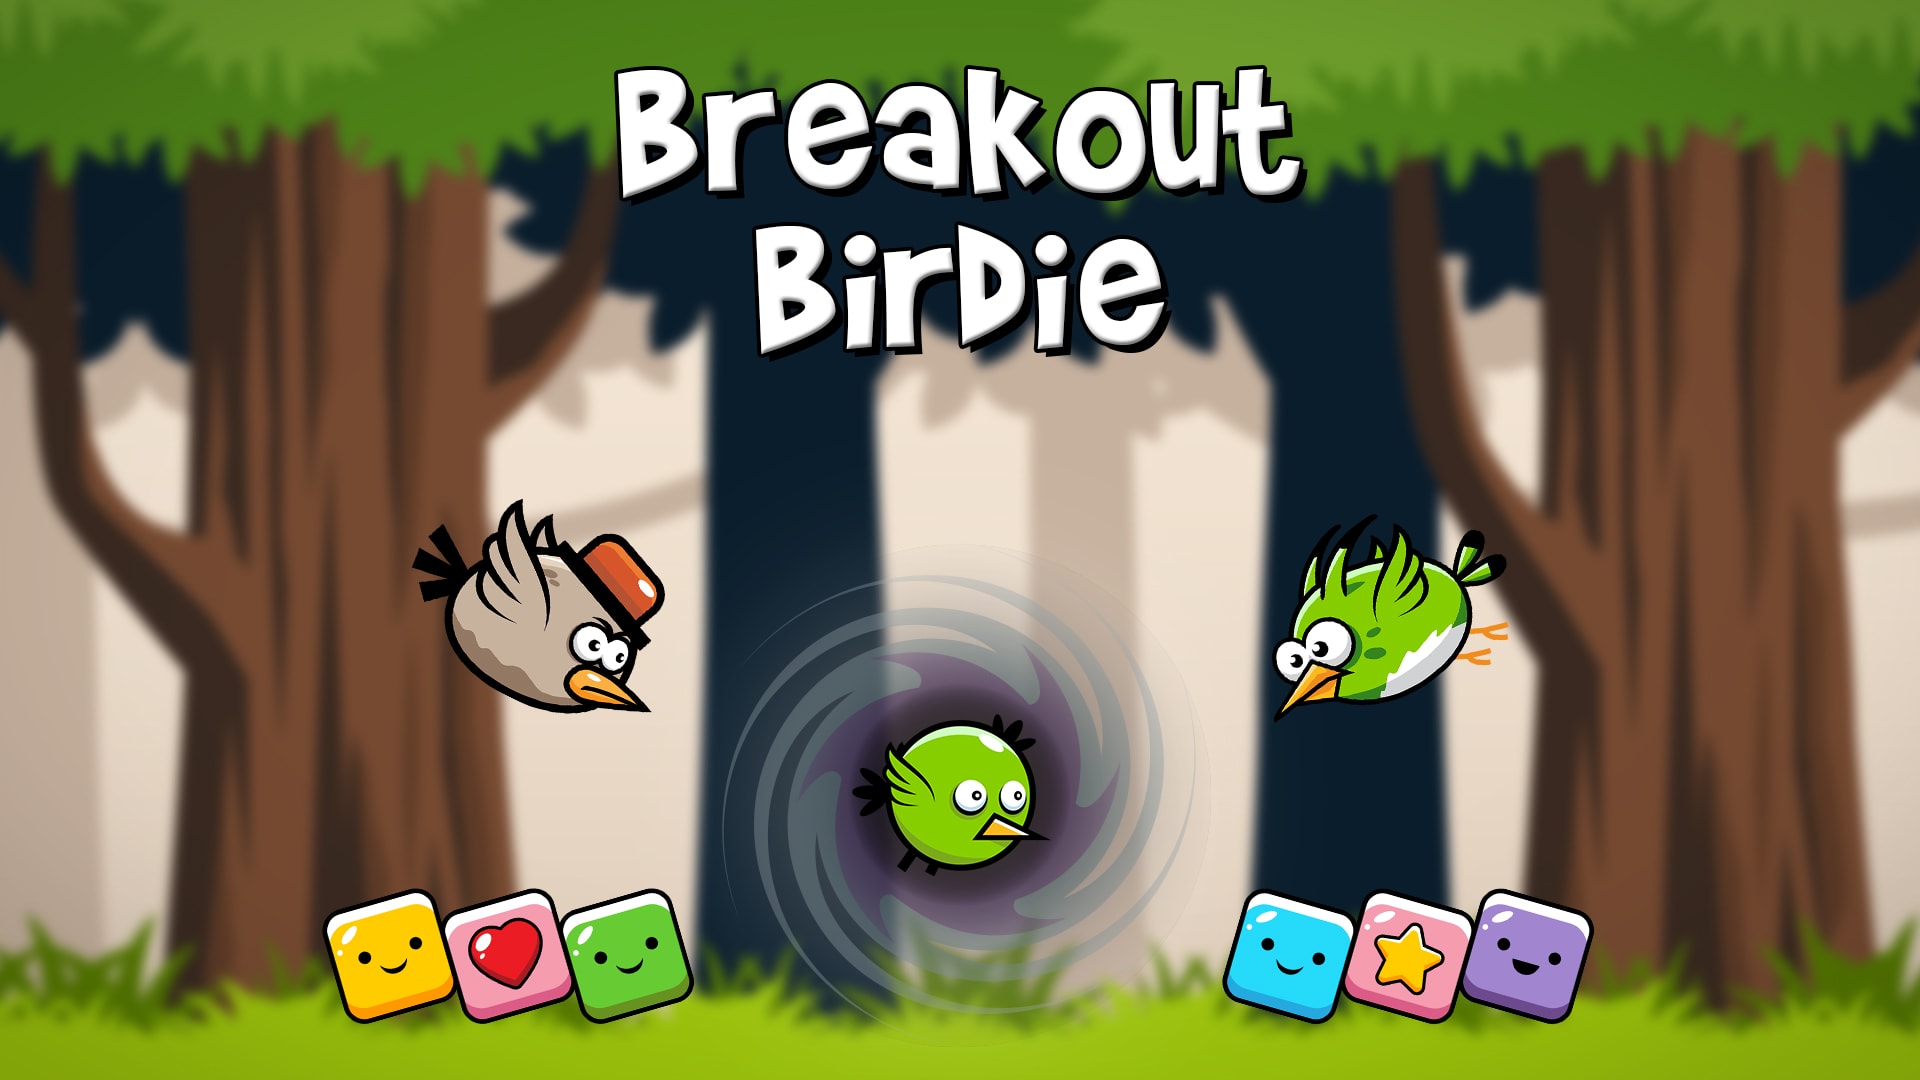 Breakout Birdie